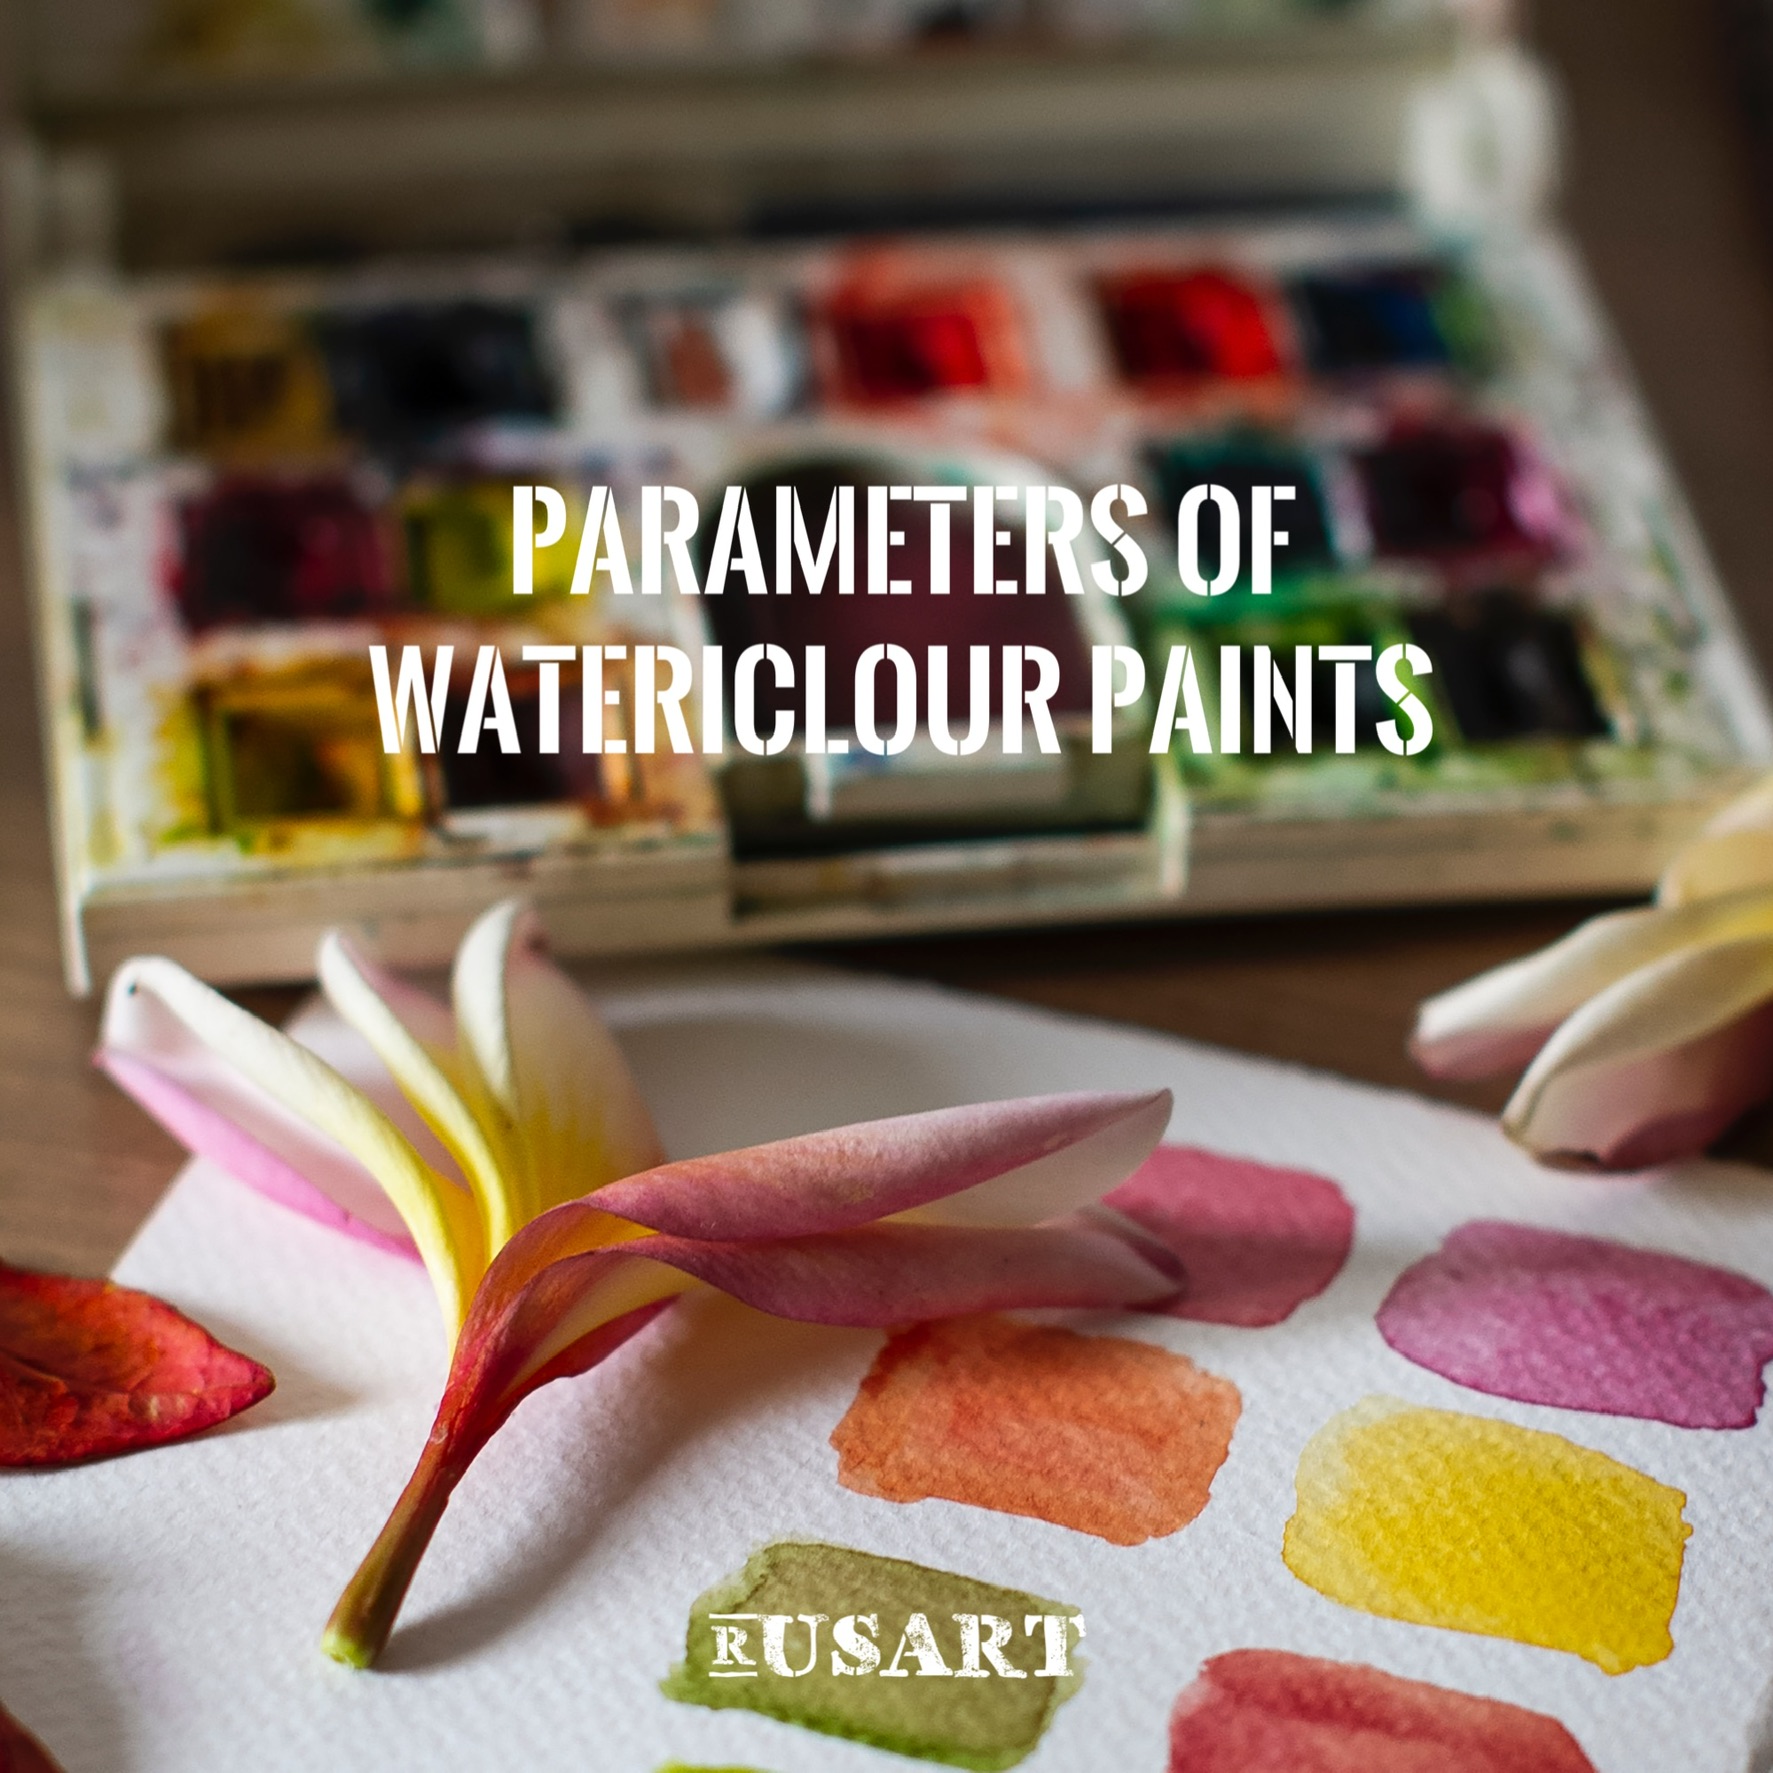 Characteristics of Watercolour Paints